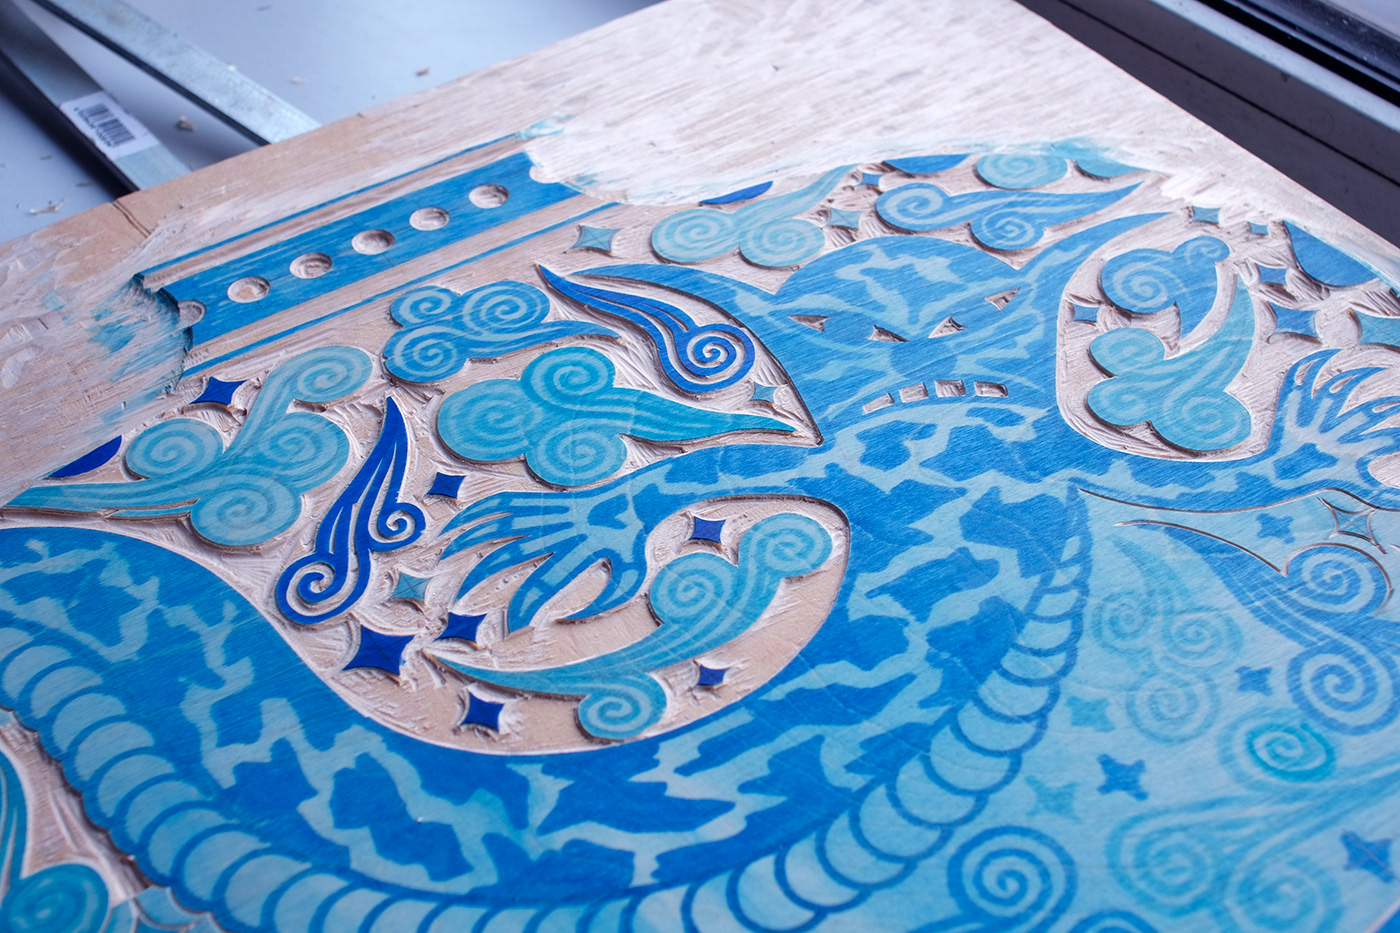 printmaking woodcut Reliefprint poster handicraft printdesign Vase decor Holzschnitt 